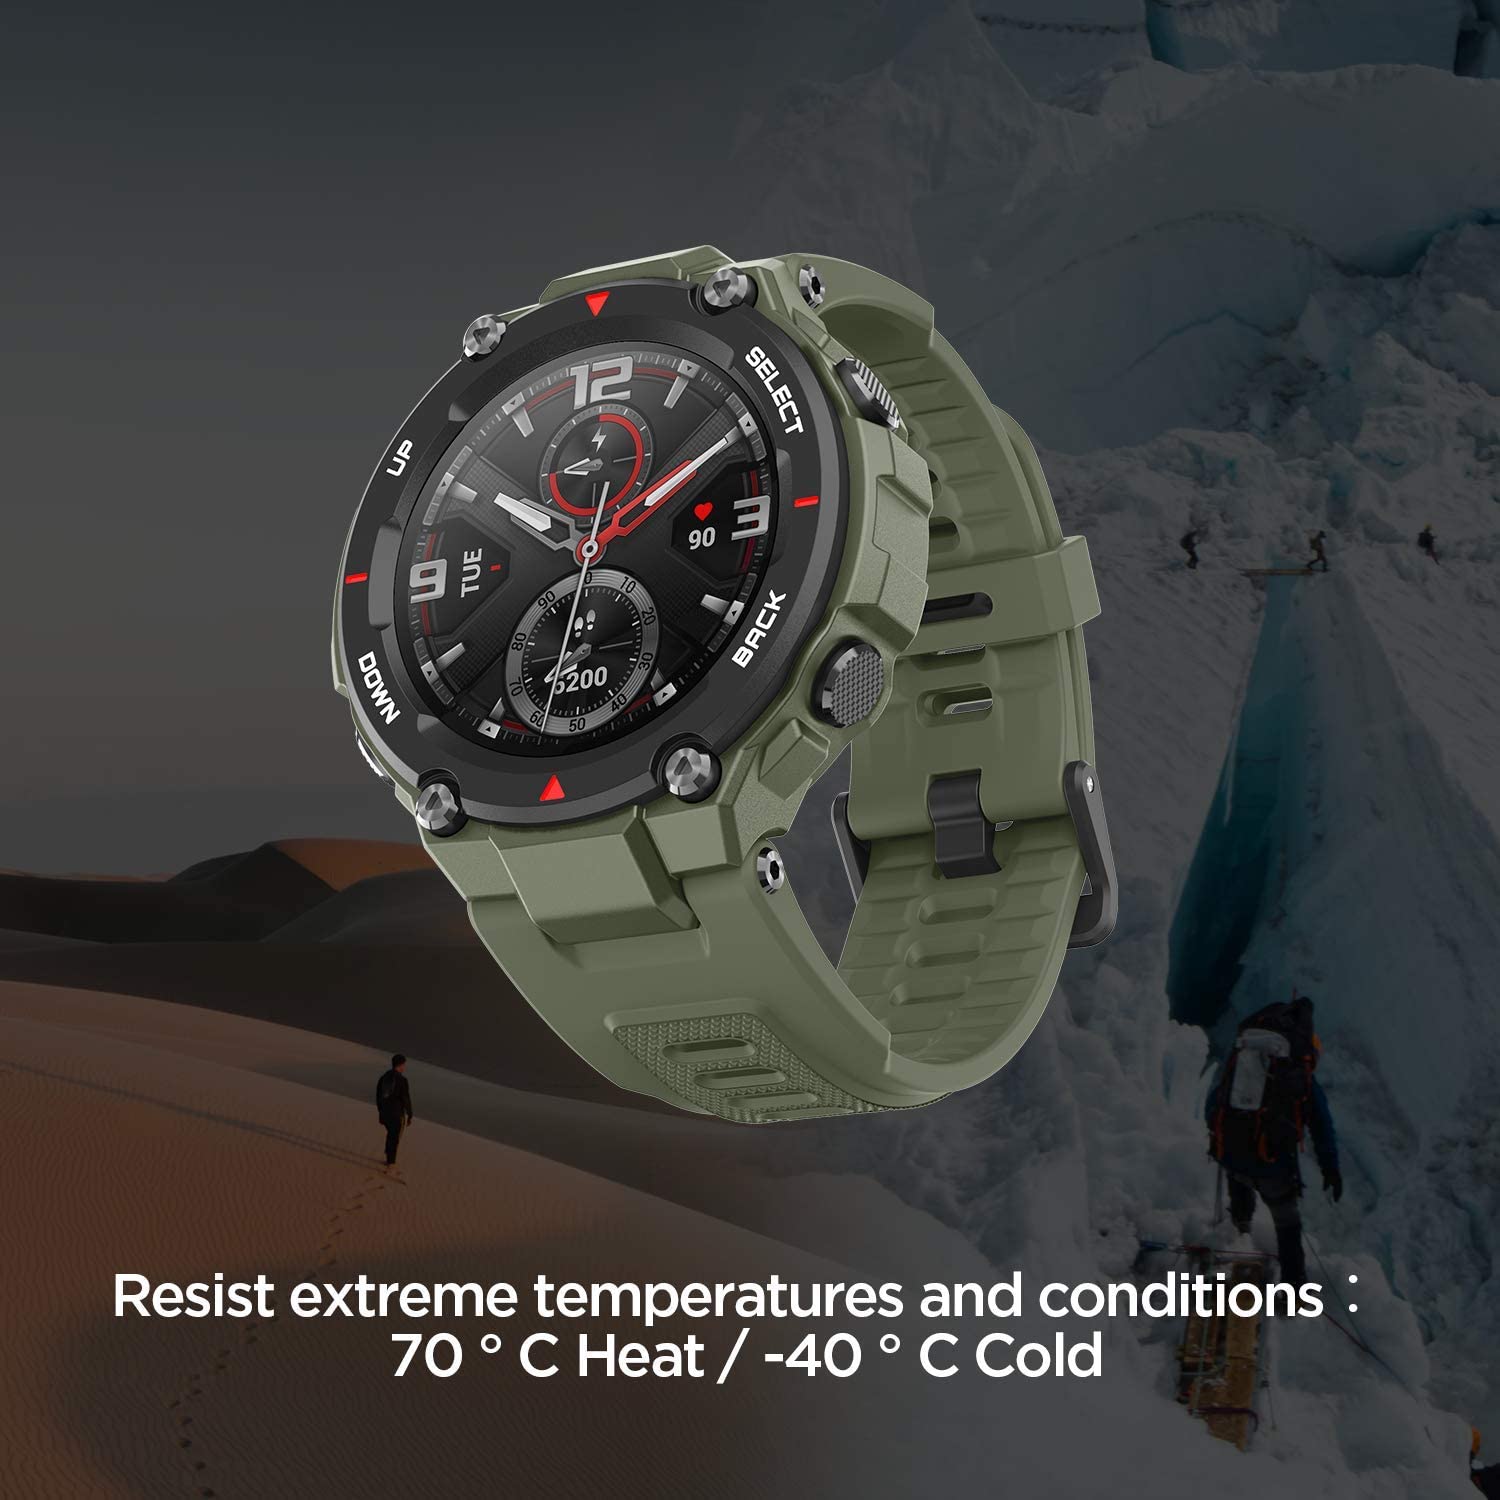 amazfit t-rex smartwatch, military standard certified